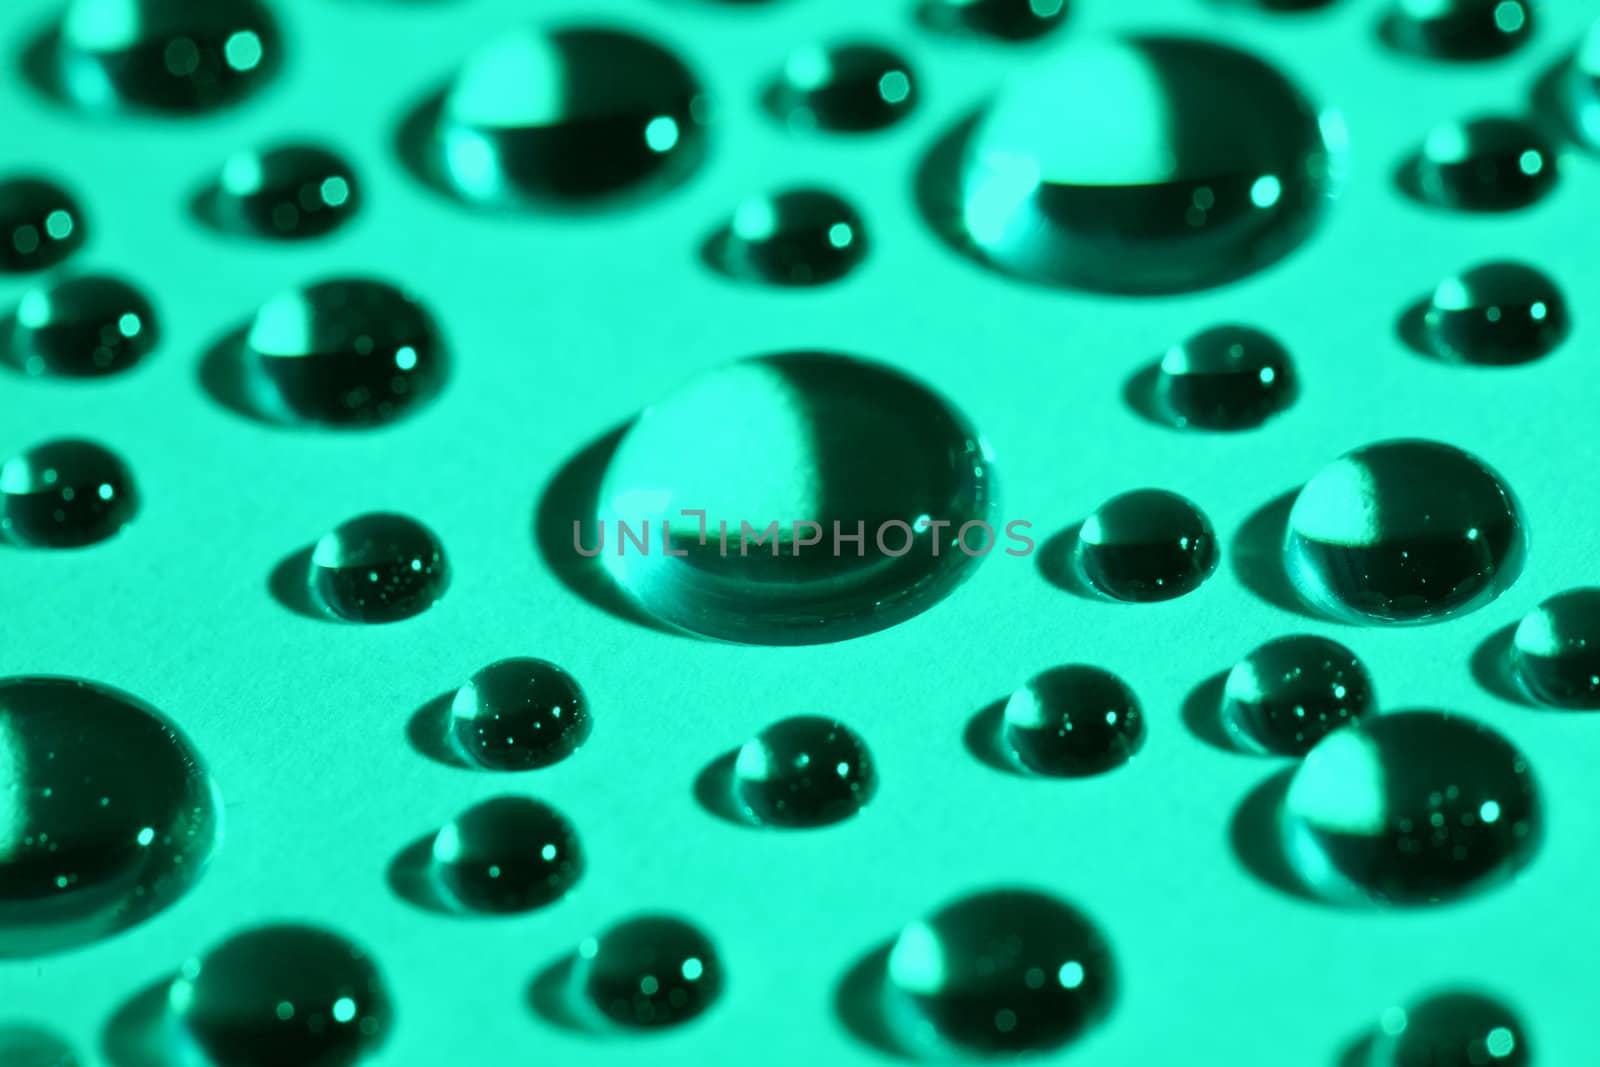 Water drops on green glass by velkol